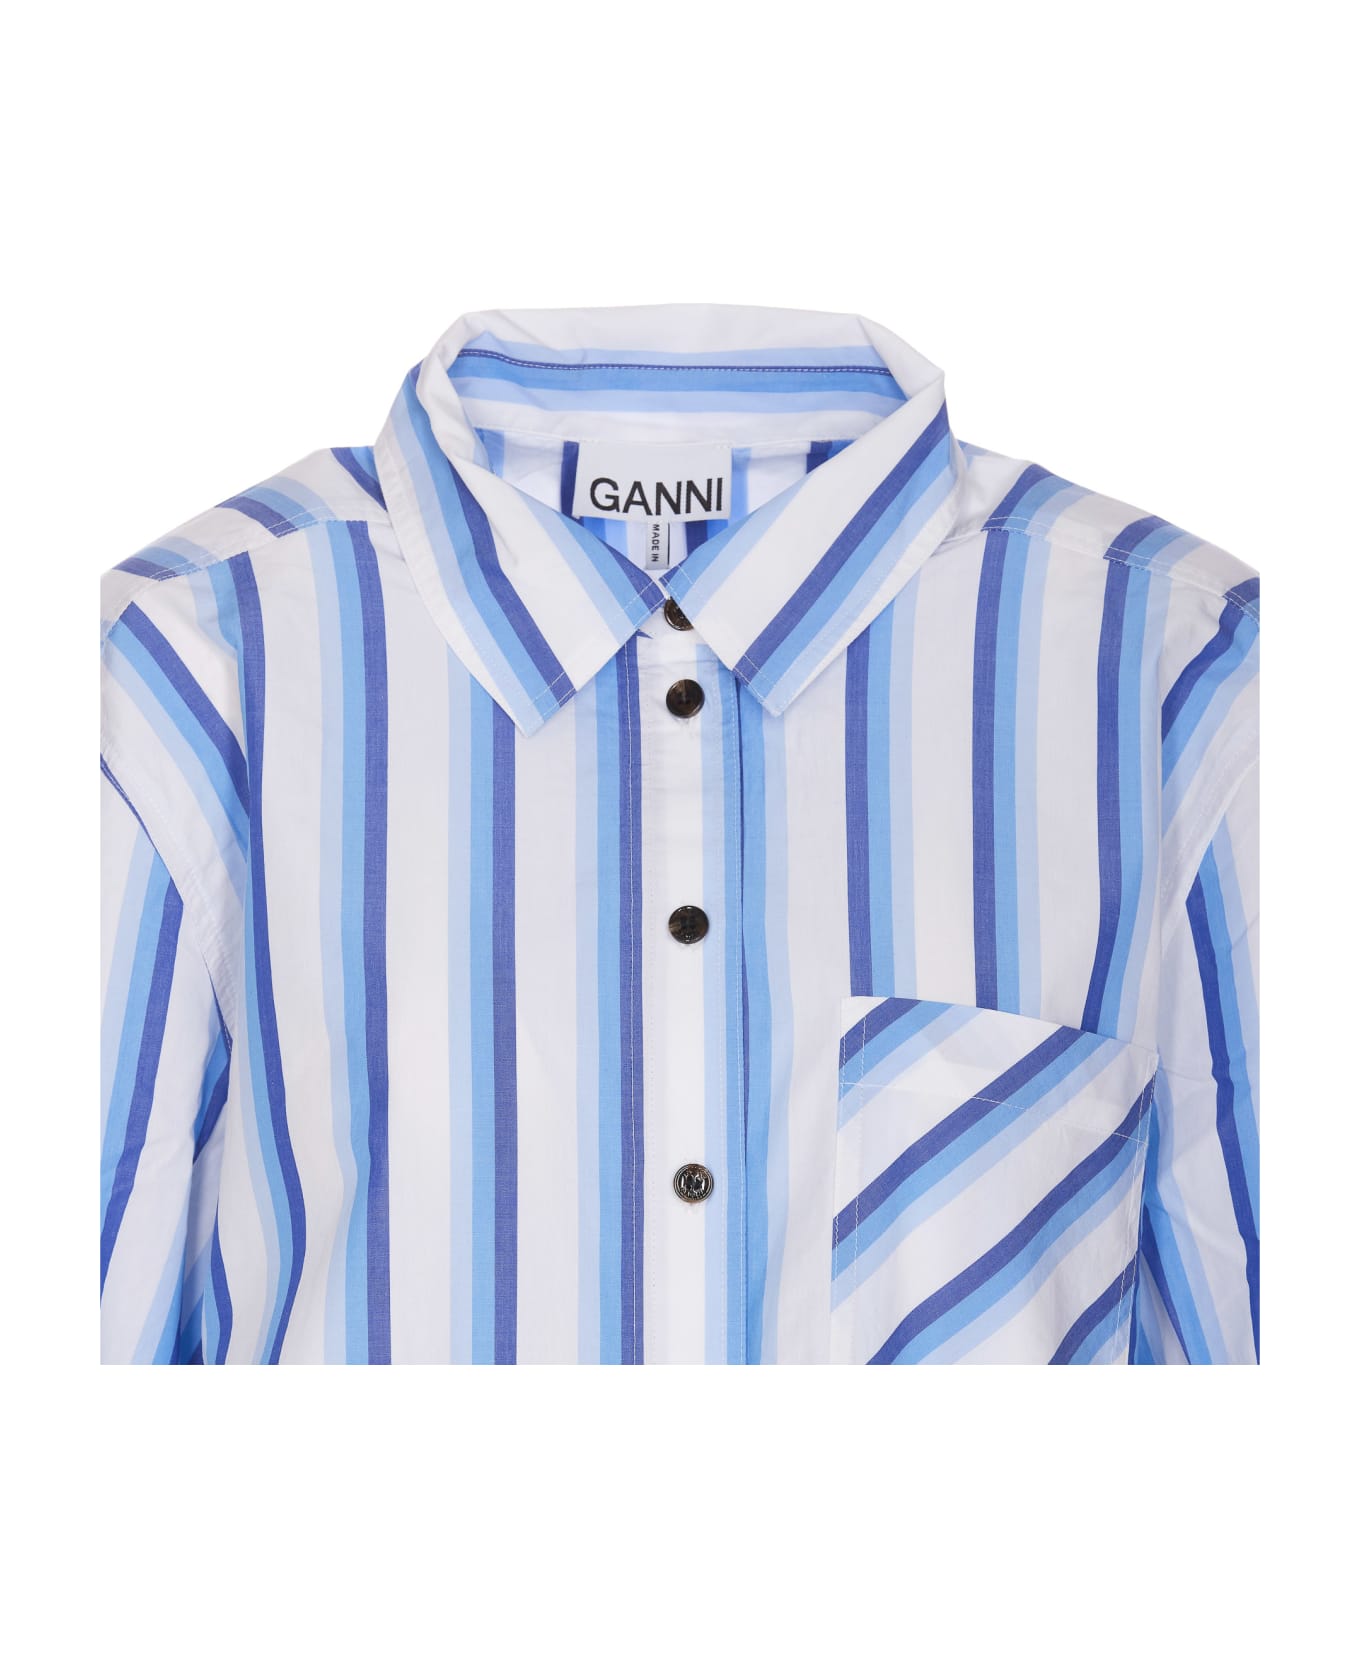 Ganni Striped Shirt - Silver Lake Blue